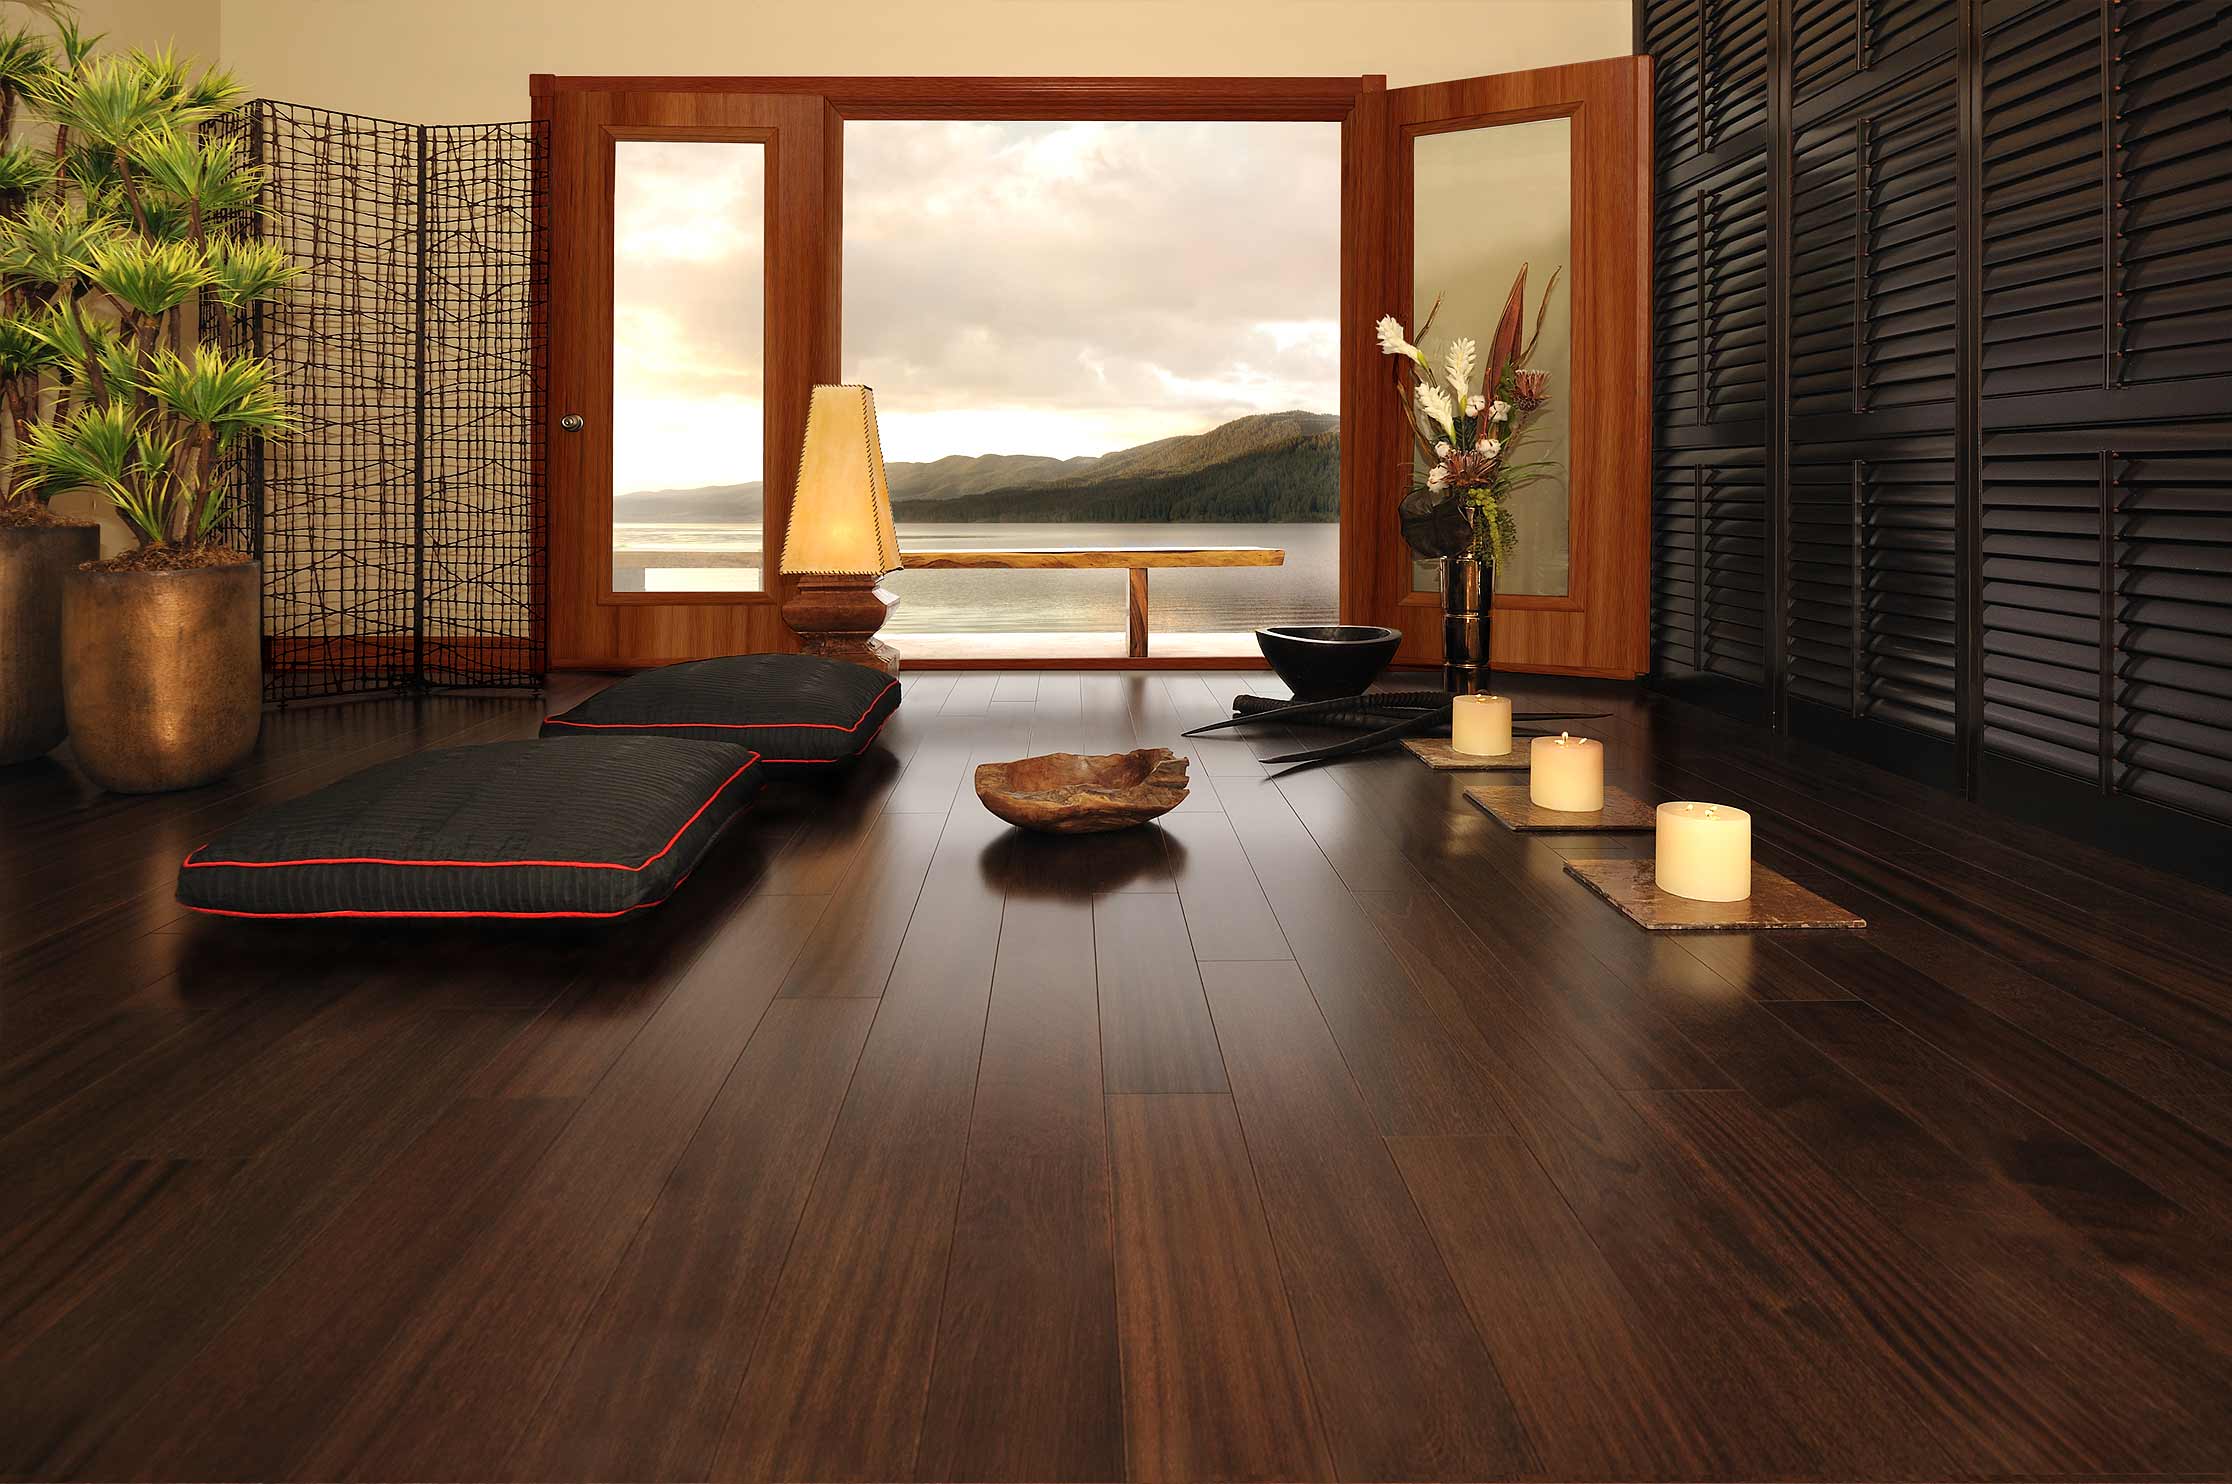 Gotfloor Carpet And Flooring, Hardwood Floor Interior Design